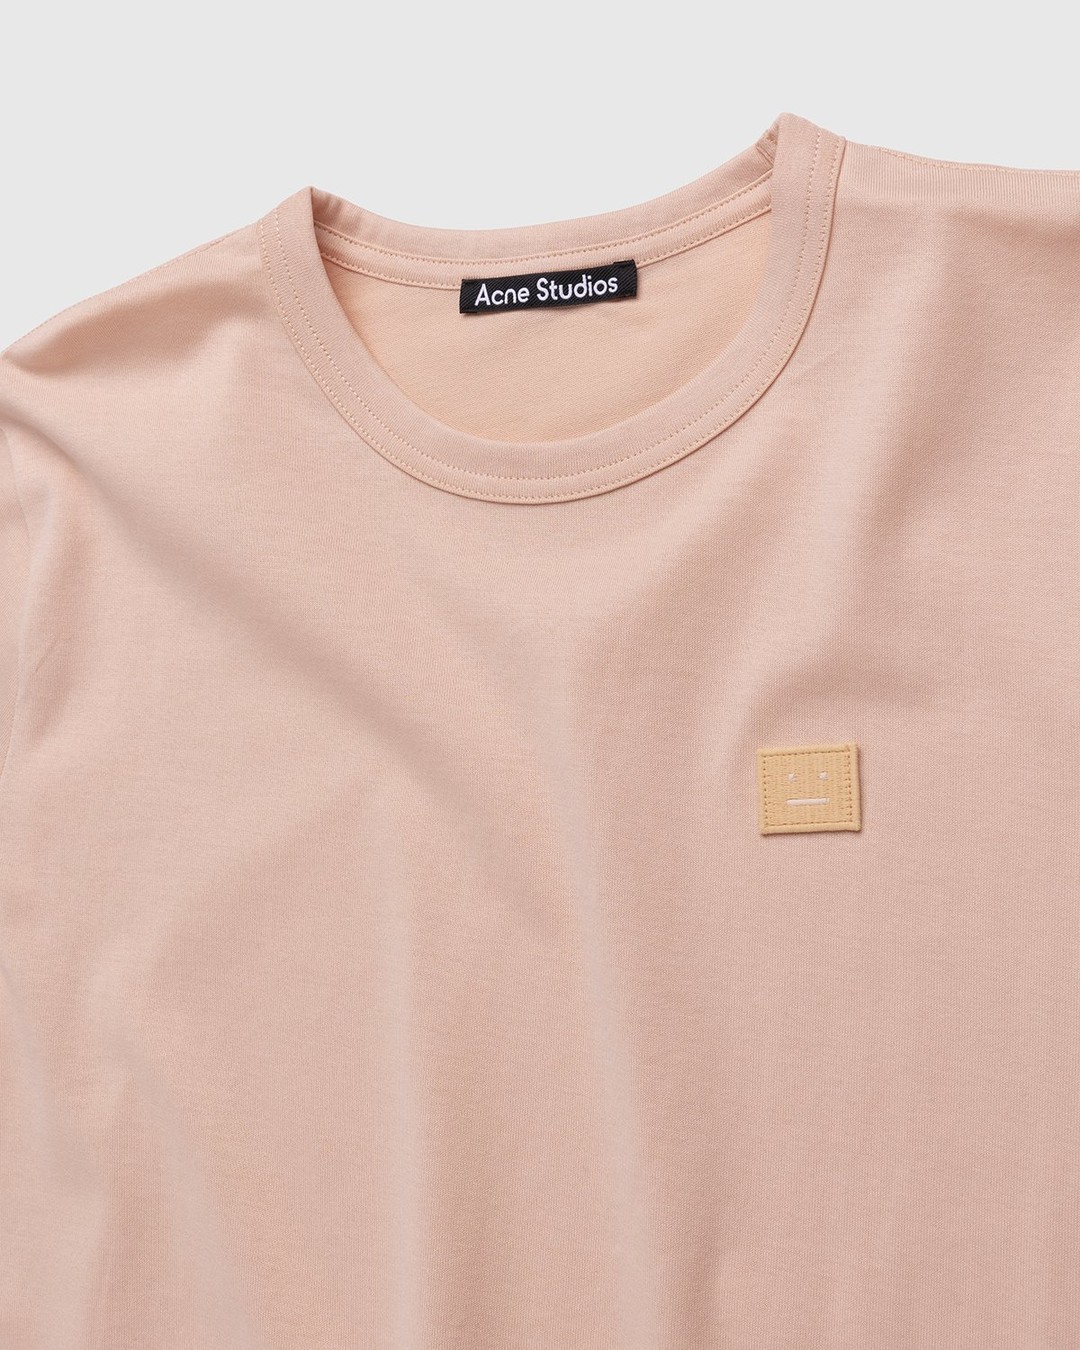 Acne Studios – Slim Fit T-Shirt Powder Pink | Highsnobiety Shop